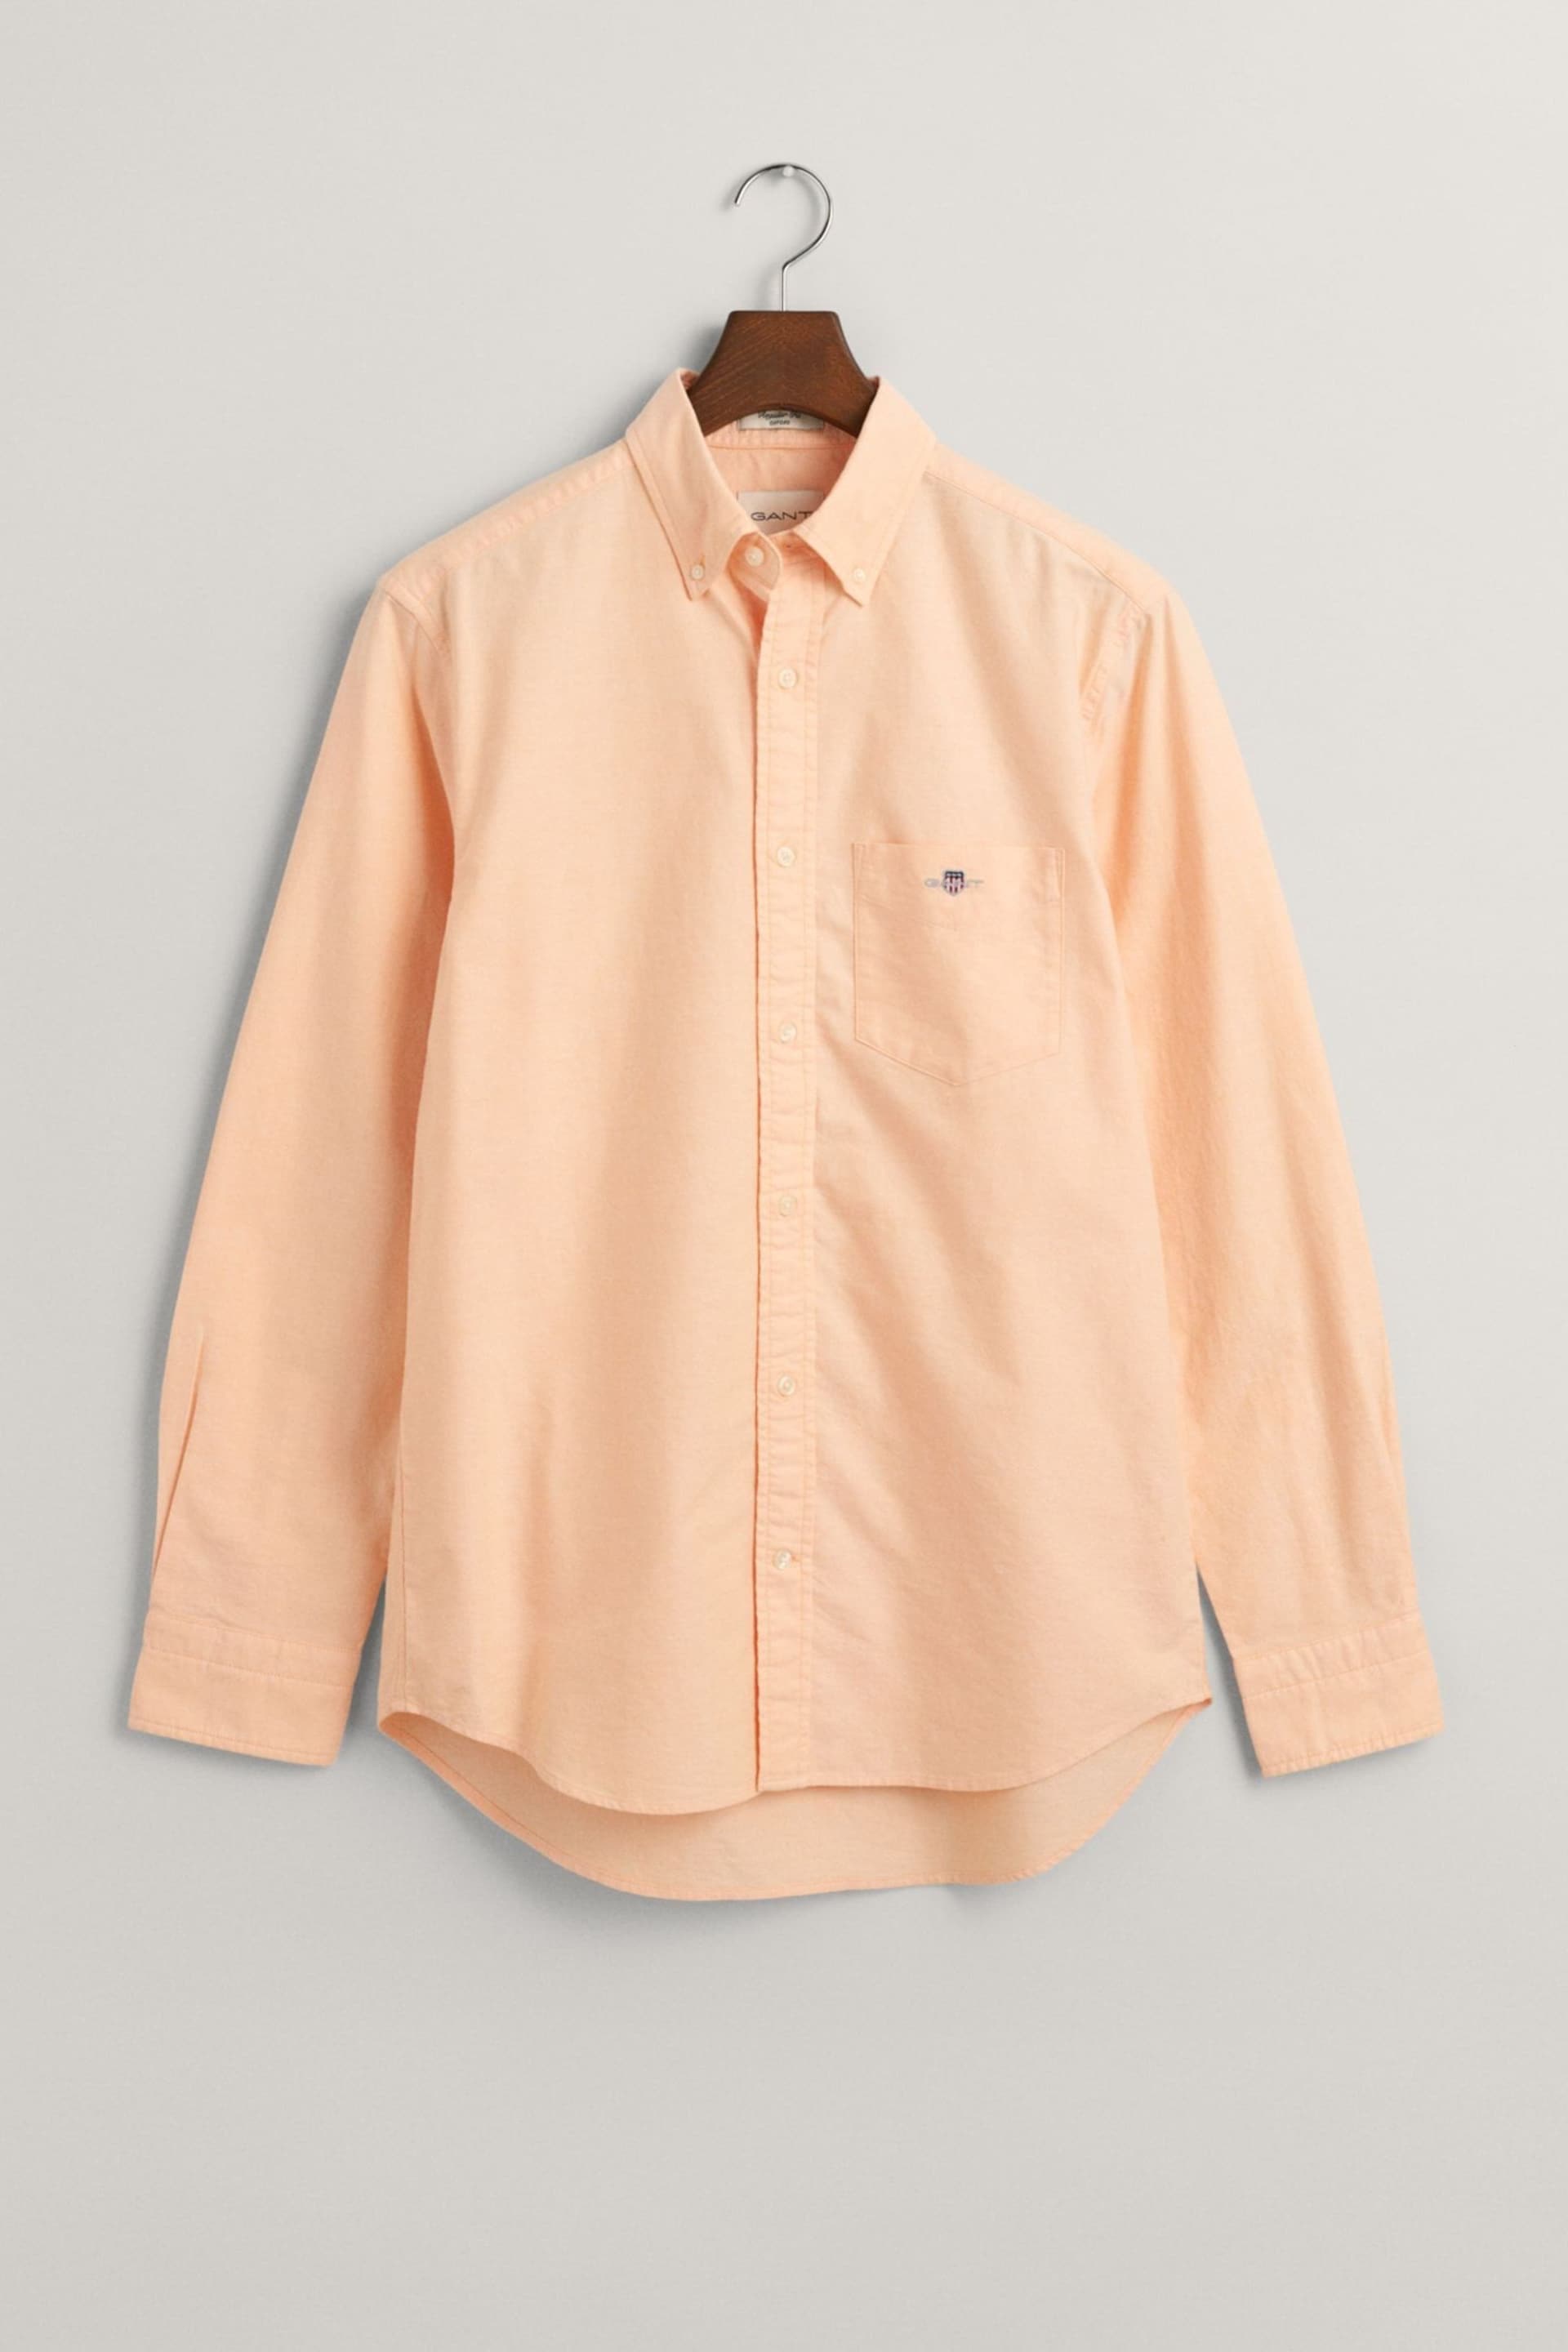 GANT Orange Regular Fit Oxford Shirt - Image 7 of 7